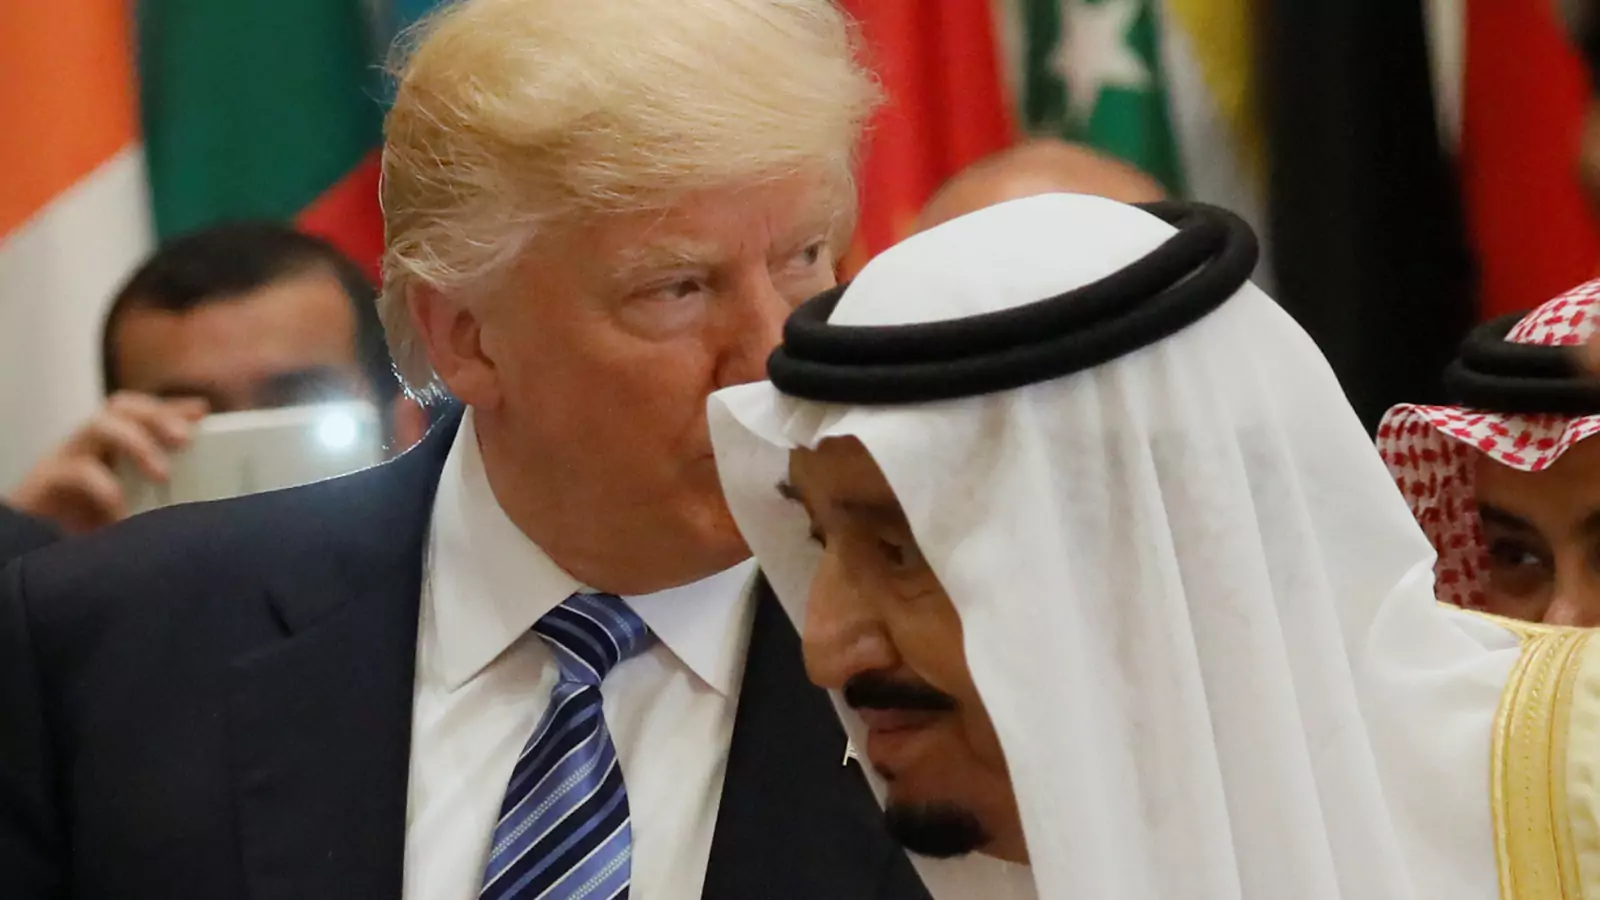 Trump and Saudi Arabia's King Salman attend the Arab Islamic American Summit in Riyadh